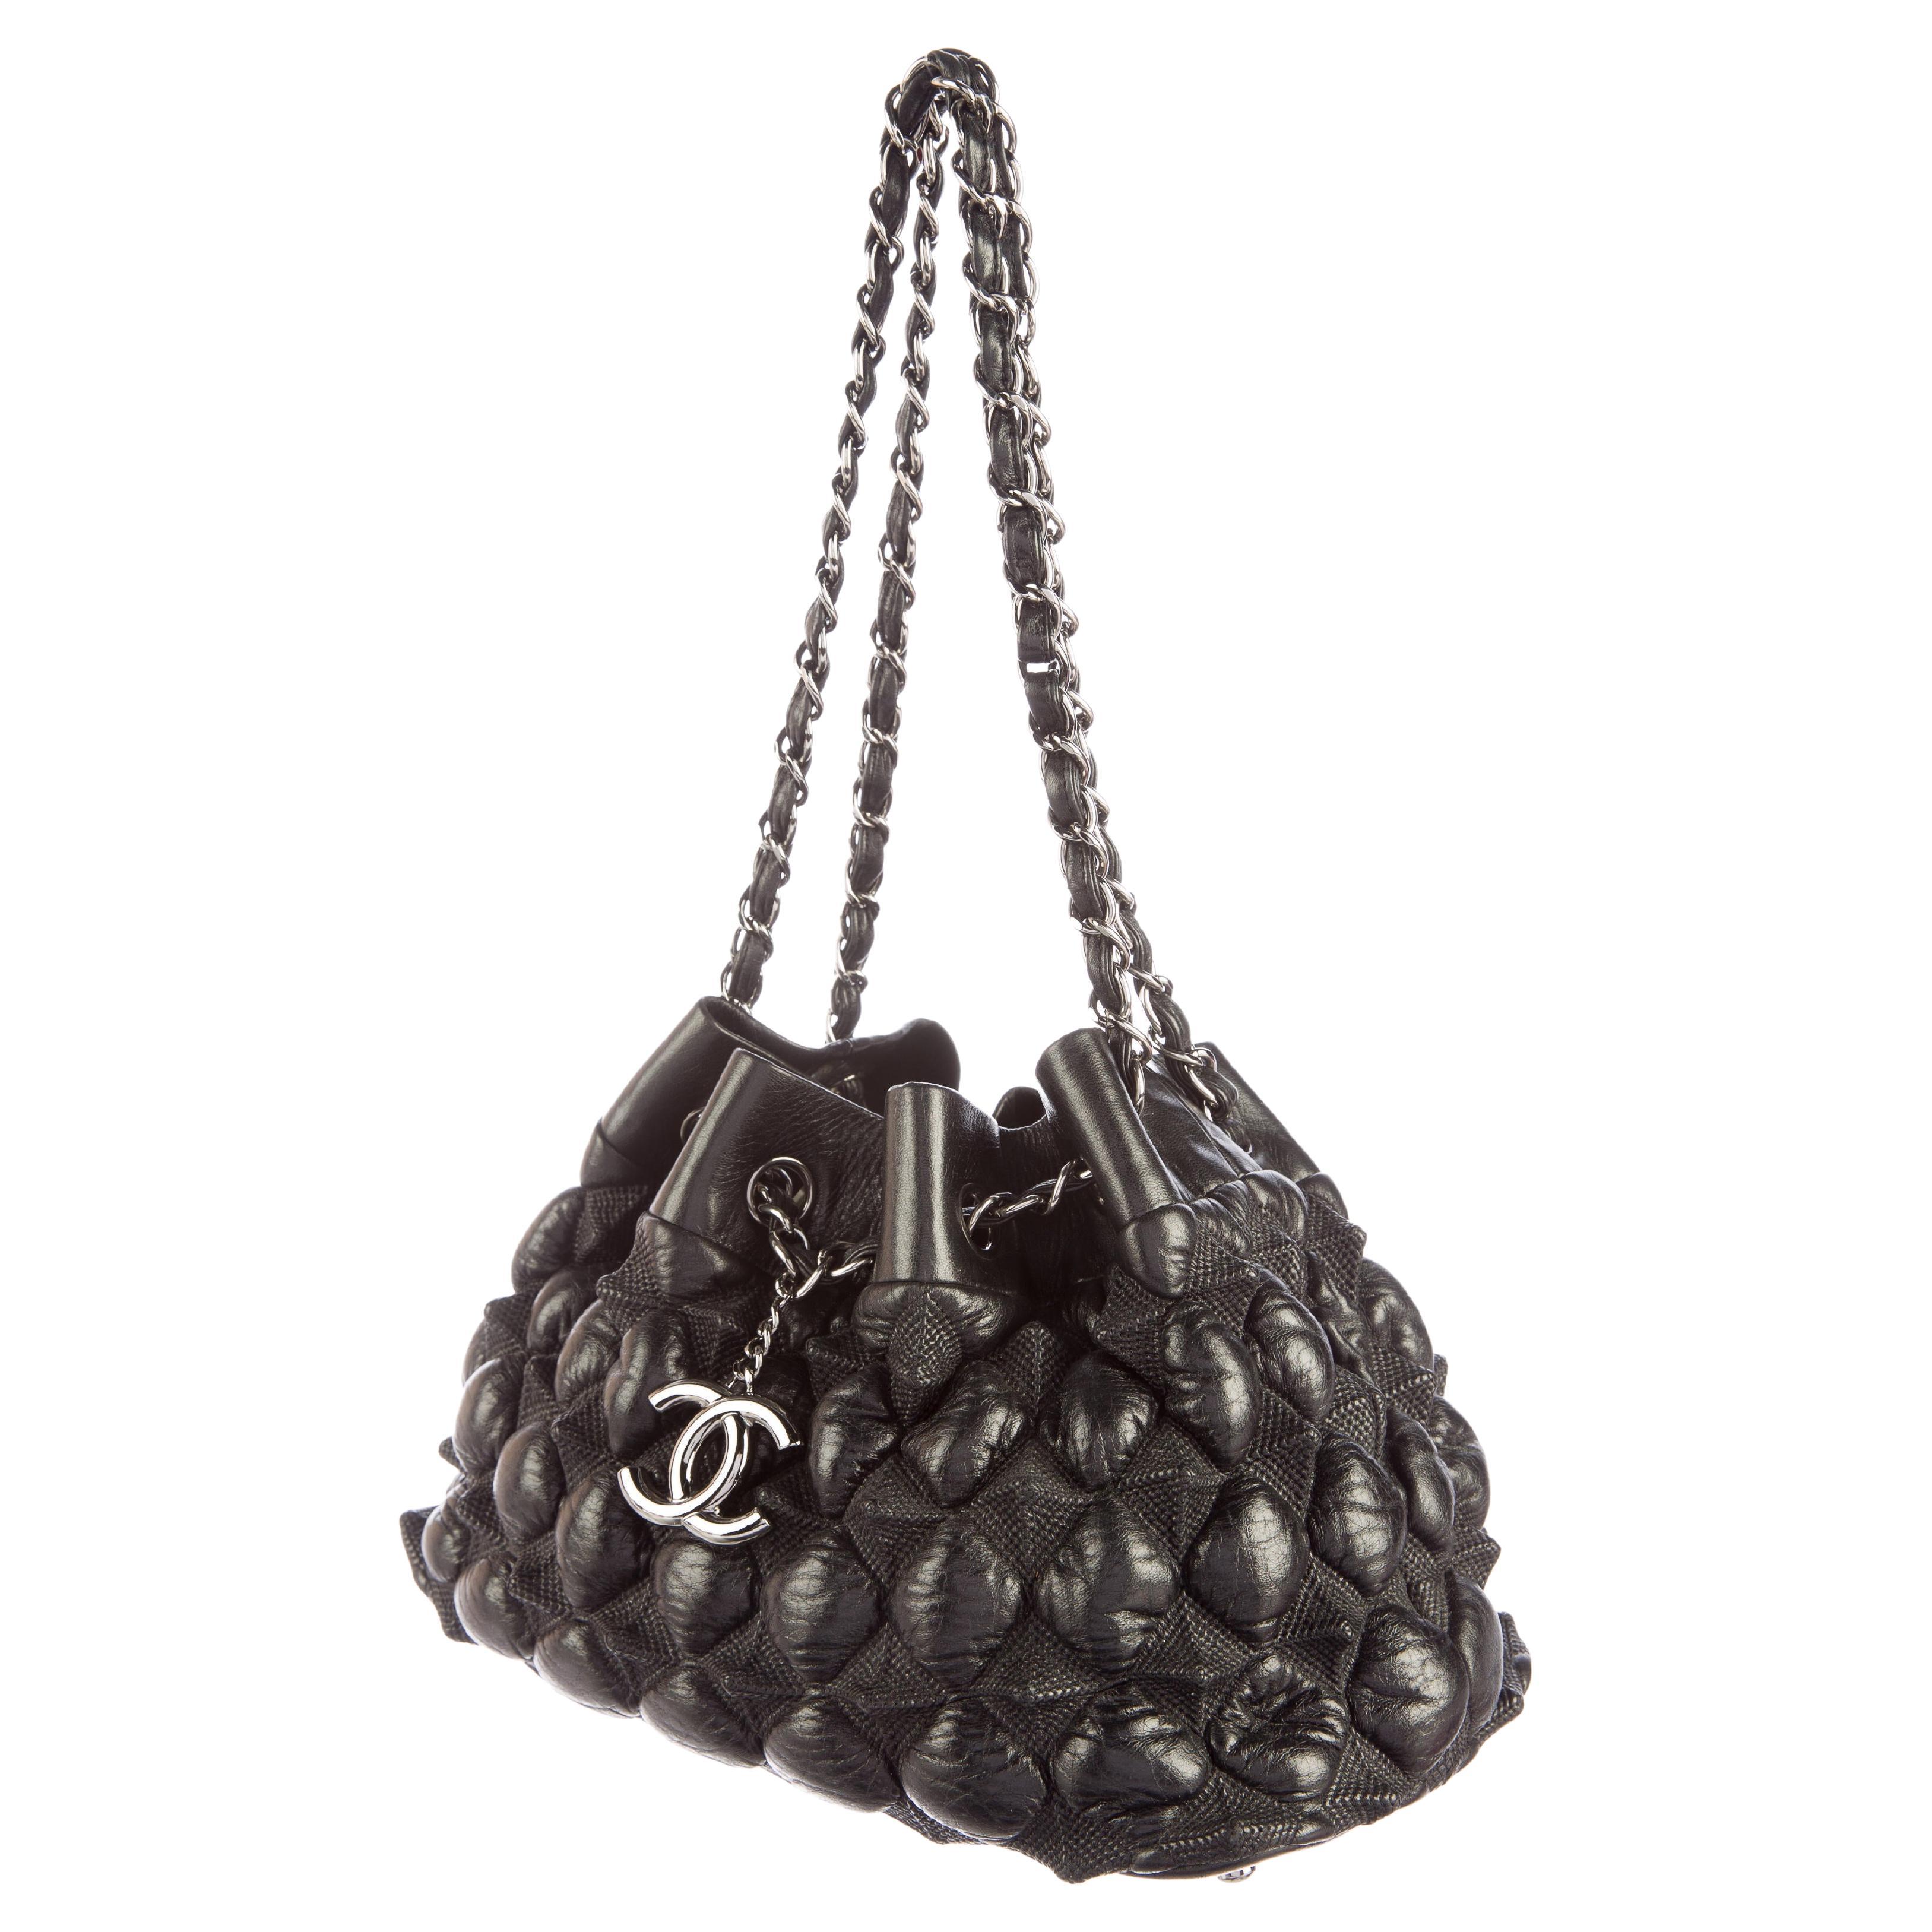 Chanel Rare Metiers d'Art Erhöhte Geometrische Pyramide Diamant Gesteppte Umhängetasche

2009 Sammlung Métiers d'Art

Hardware aus Rotguss
Klassische verflochtene Lederkette 
Kordelzugverschluss
Erhabene geometrische 3D-Steppung aus Leder mit